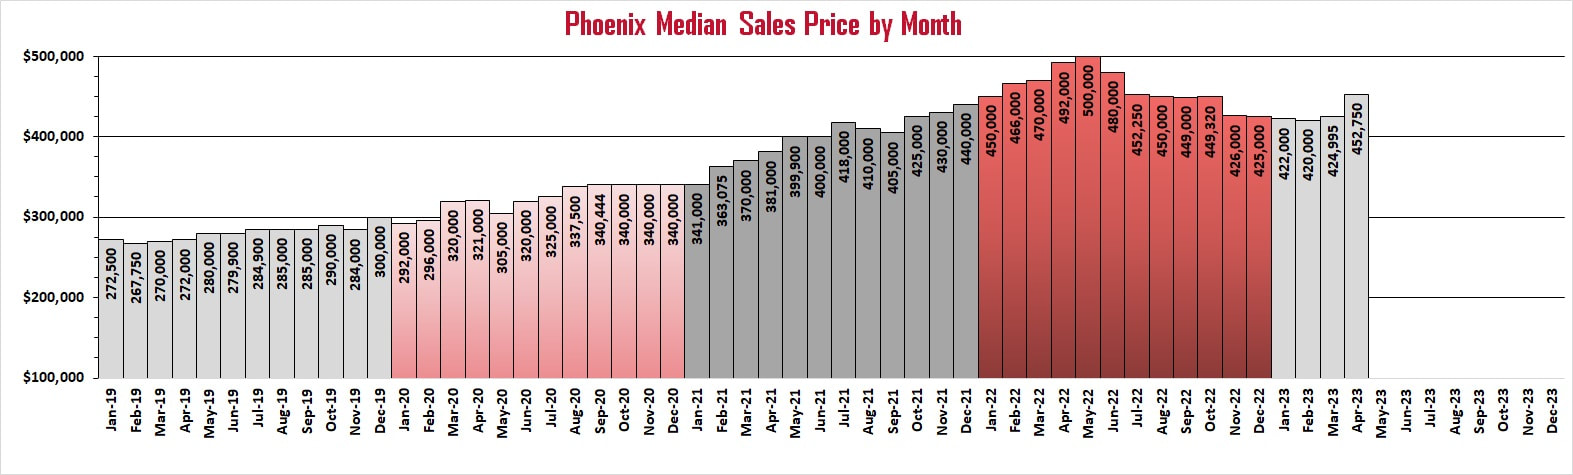 Phoenix Market Reports - Median Sales Price by Month | Troy Erickson Realtor